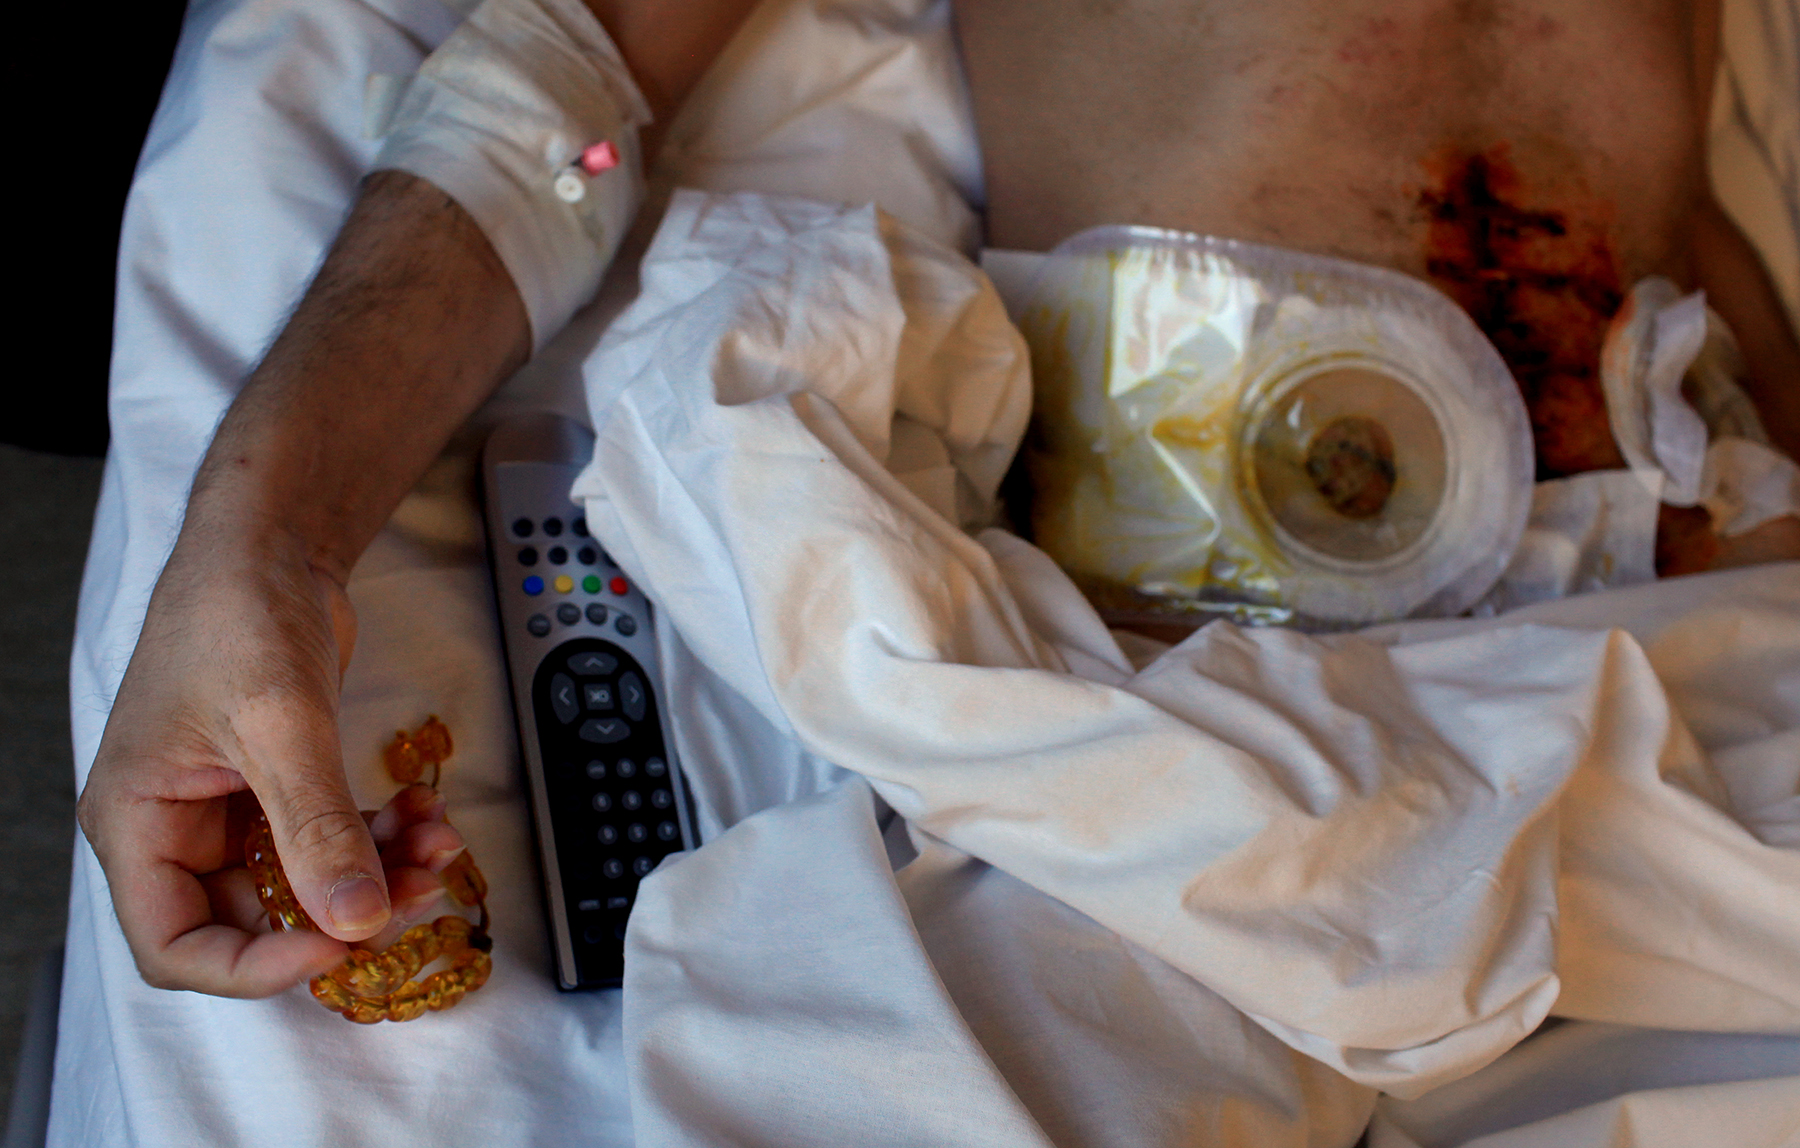  Injured Syrian rebel fighter, Antakya, Turkey 2012 